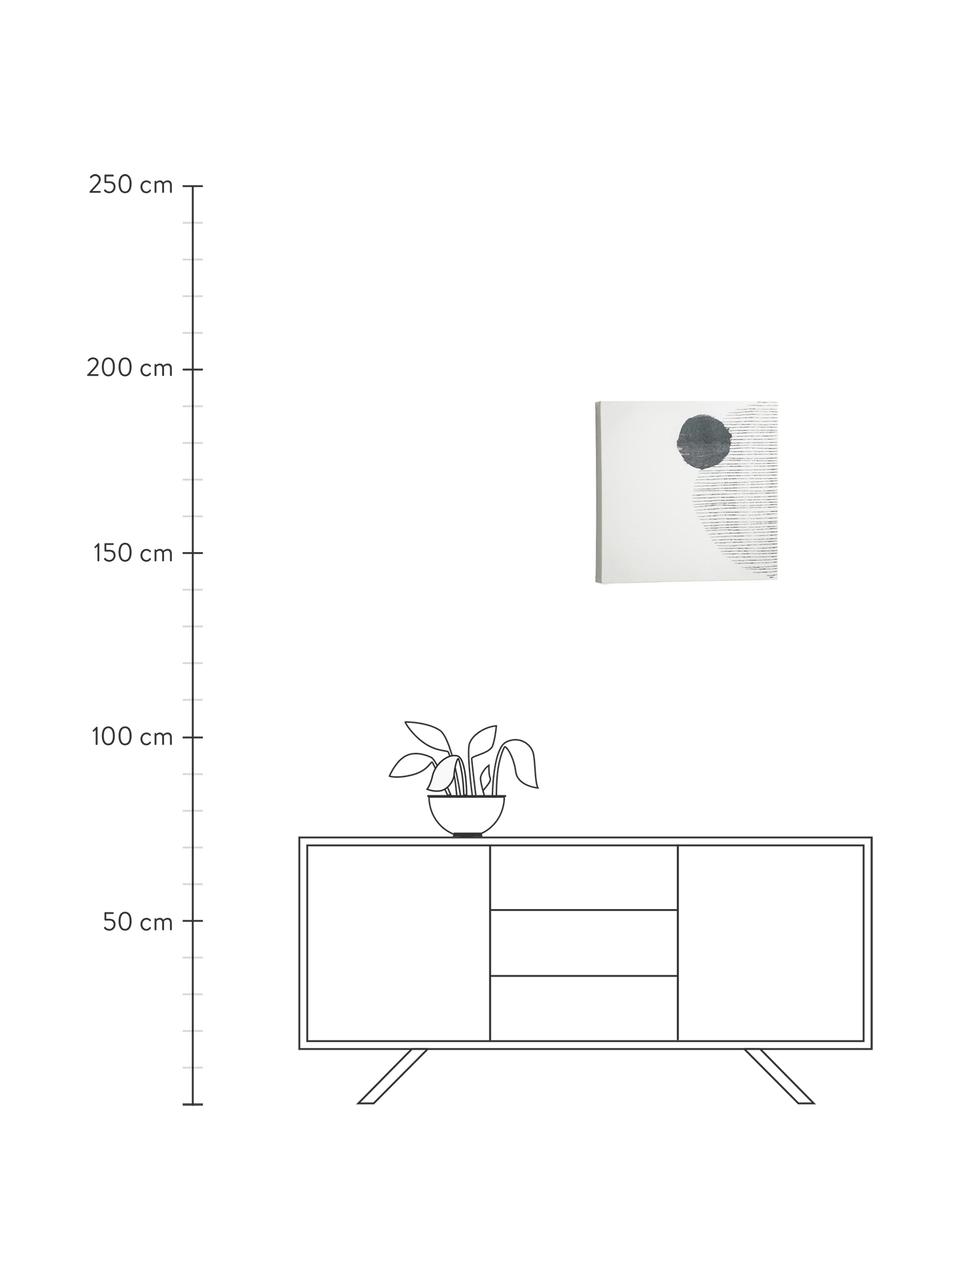 Leinwanddruck Prisma, Bild: Leinwand, Weiß, Schwarz, B 50 x H 50 cm